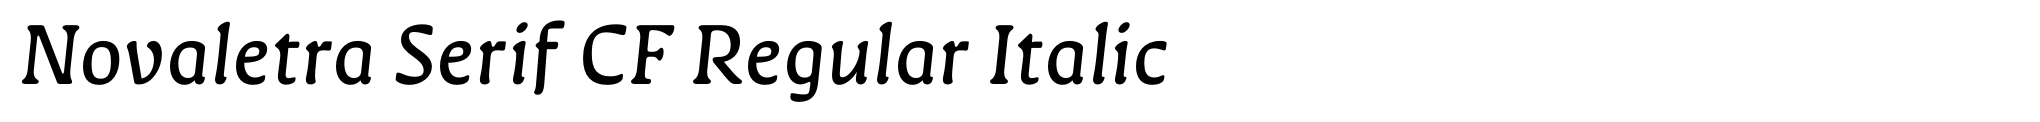 Novaletra Serif CF Regular Italic image